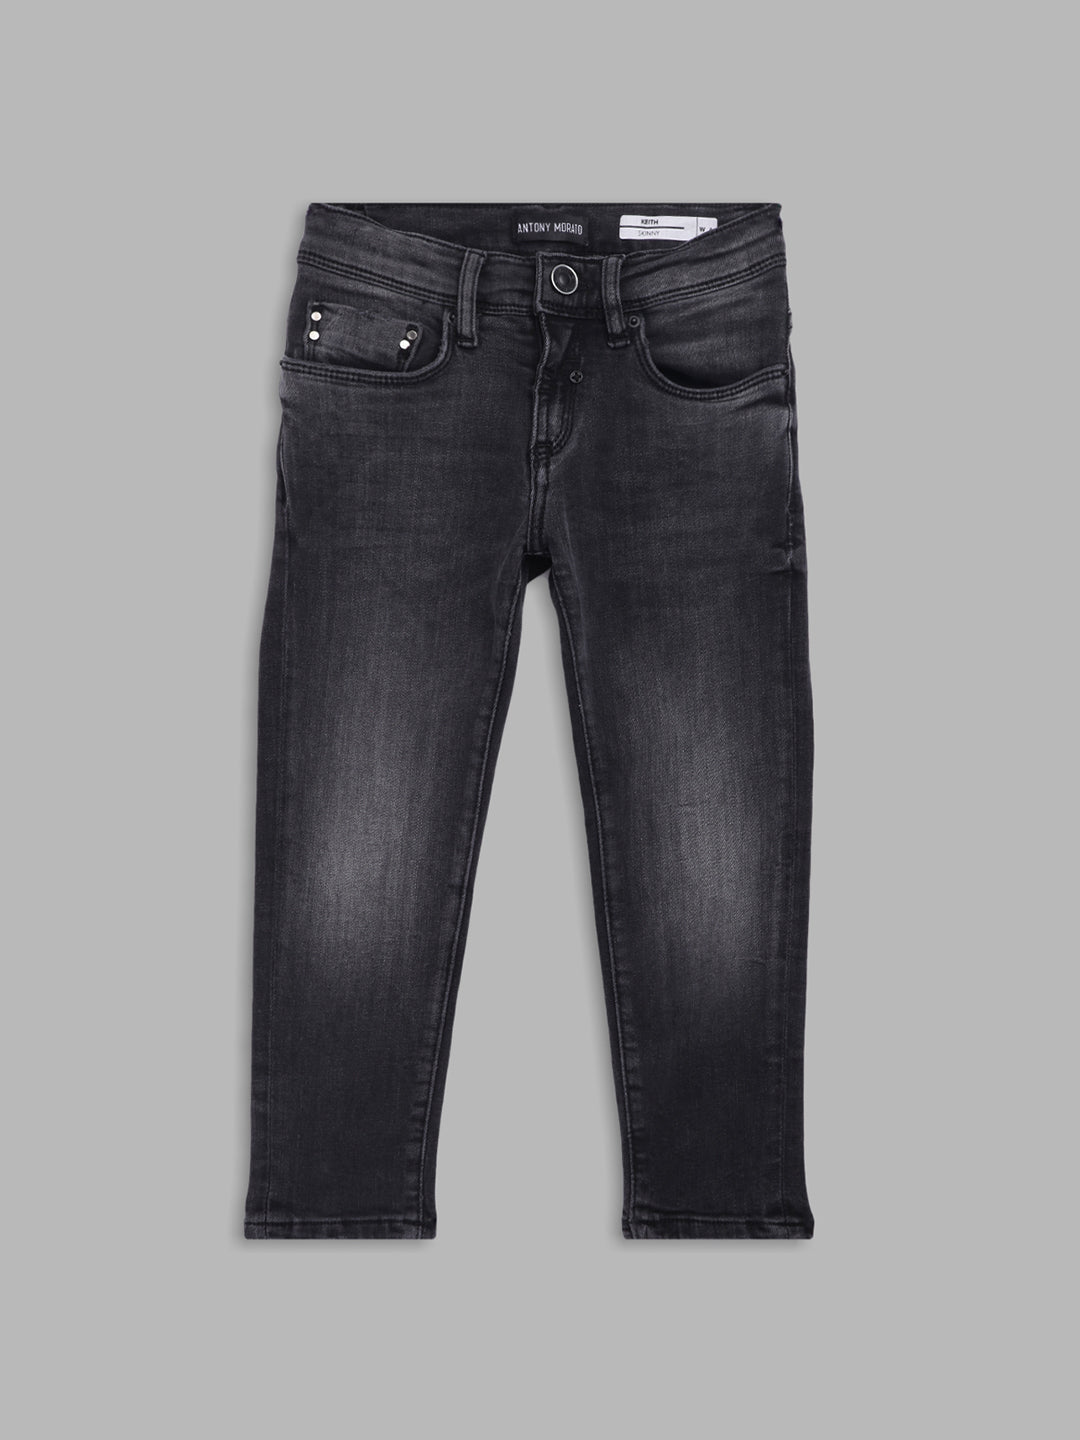 Antony Morato Boys Black Skinny Fit Light Fade Jeans